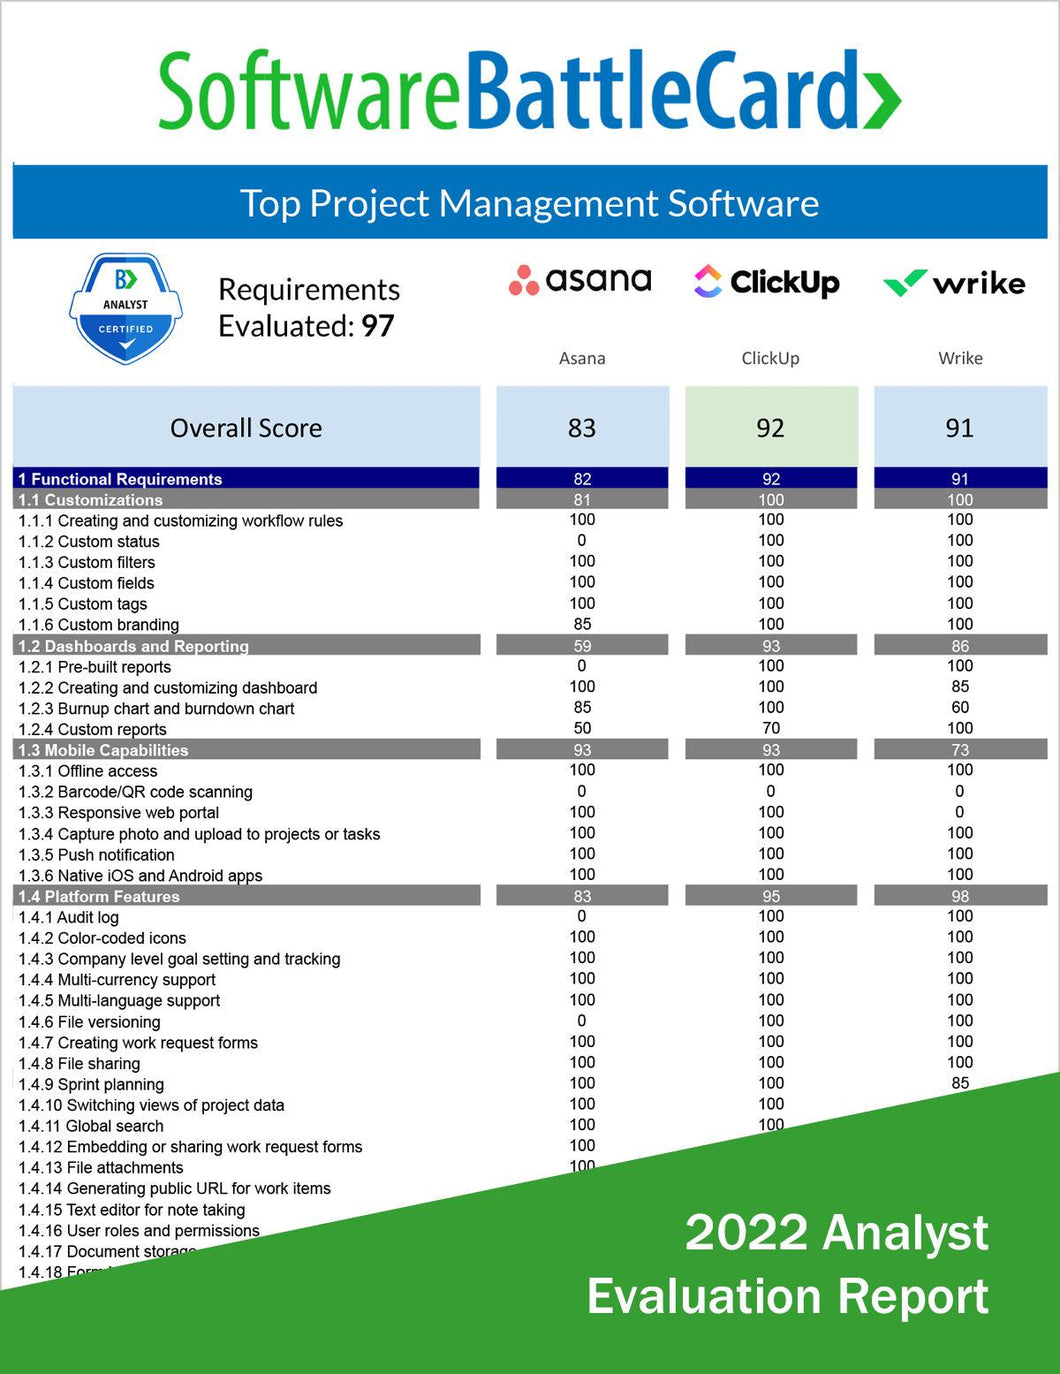 Top Project Management Software BattleCard: Asana vs. ClickUp vs. Wrike